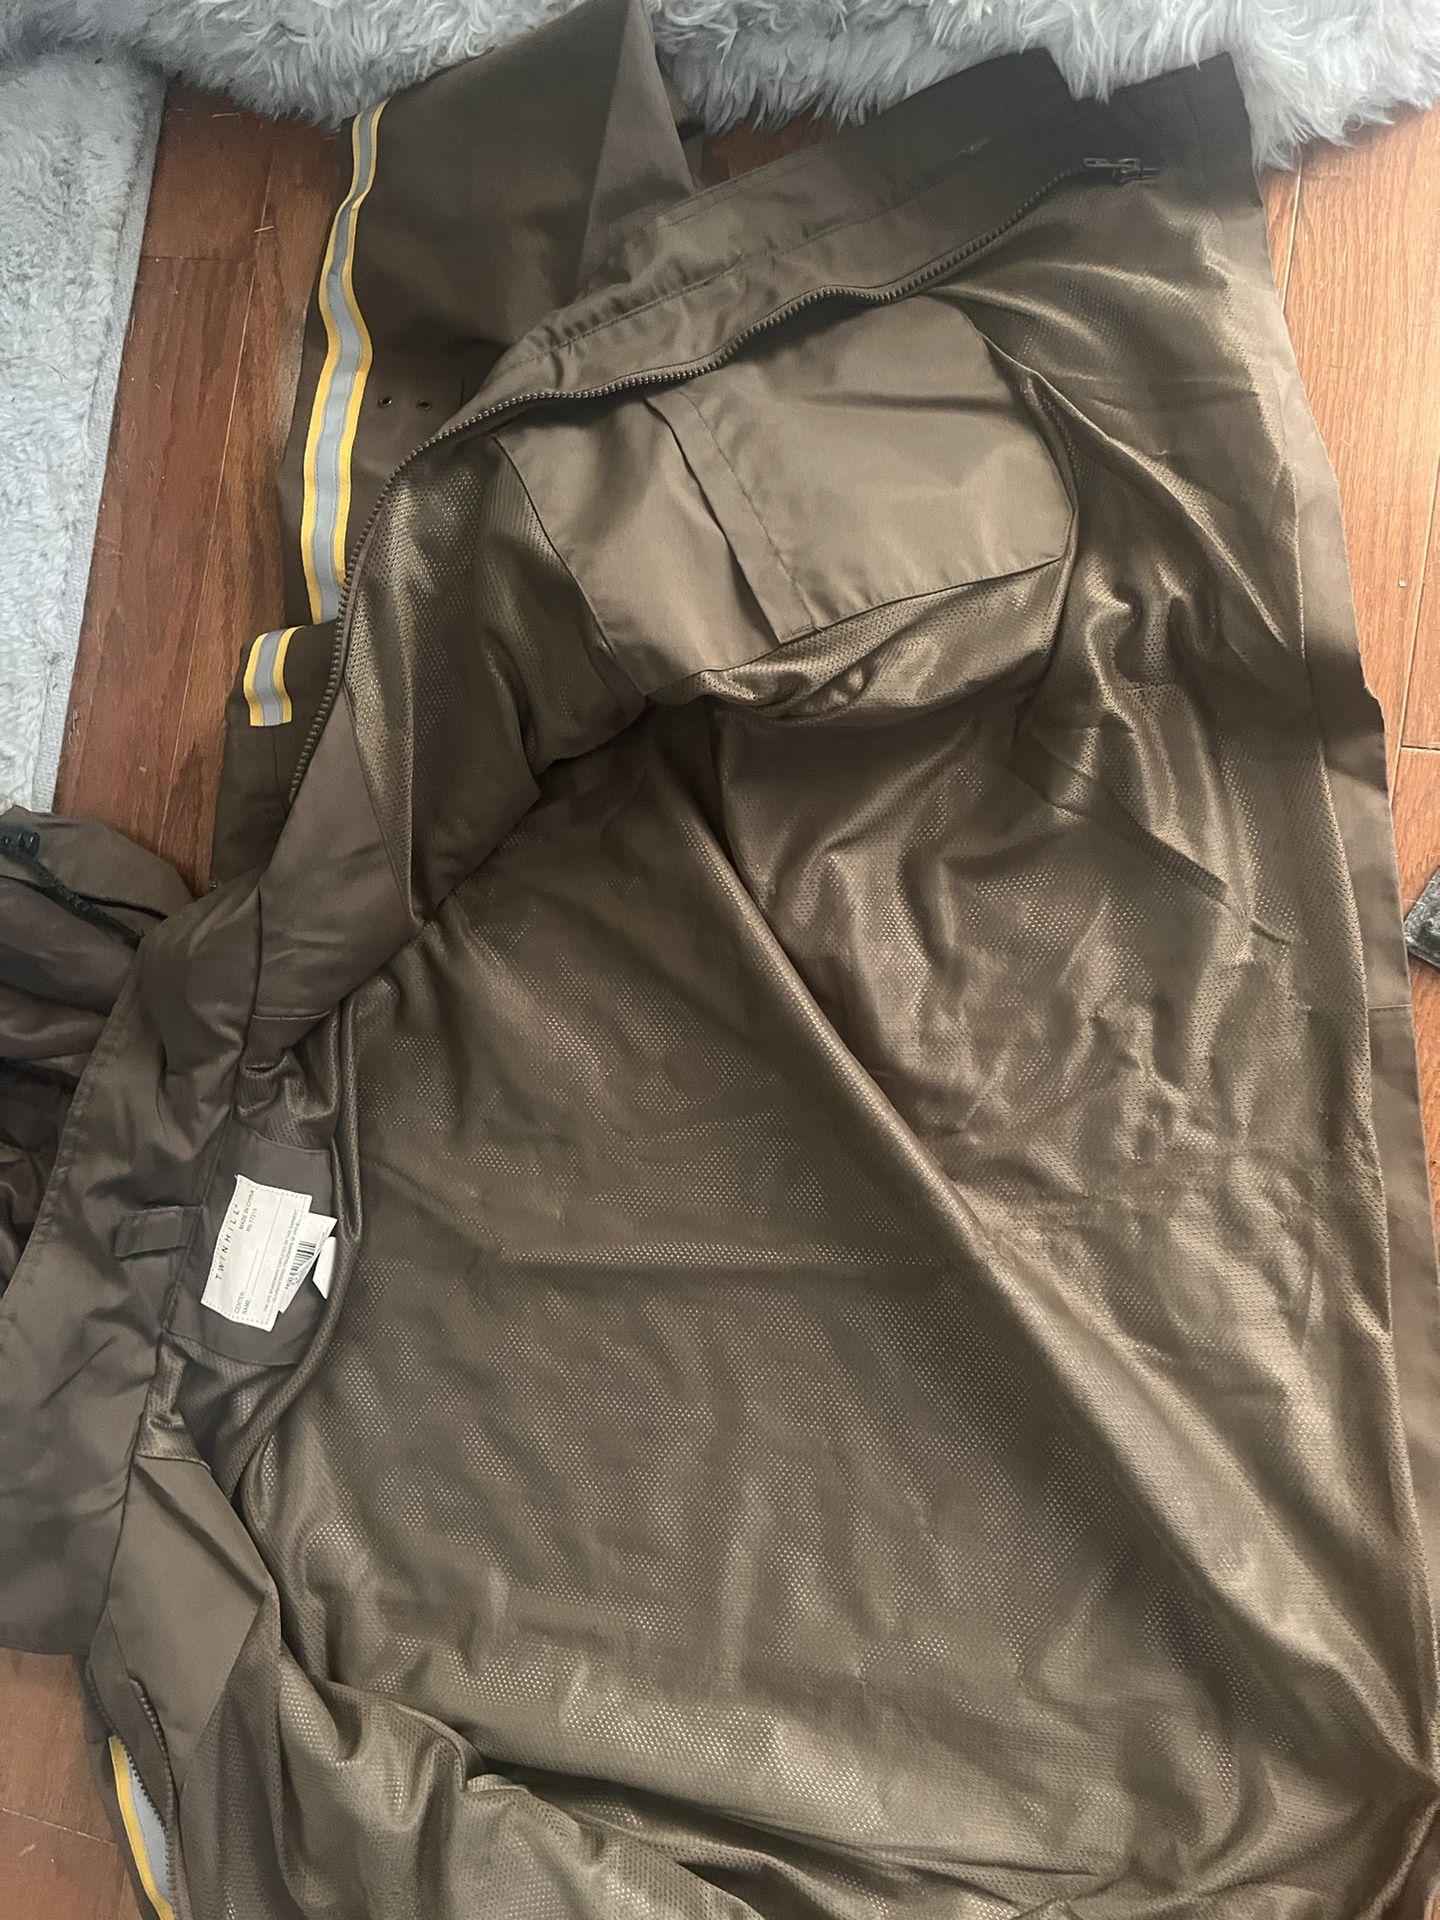 UPS Rain Jacket Large for Sale in San Antonio, TX - OfferUp